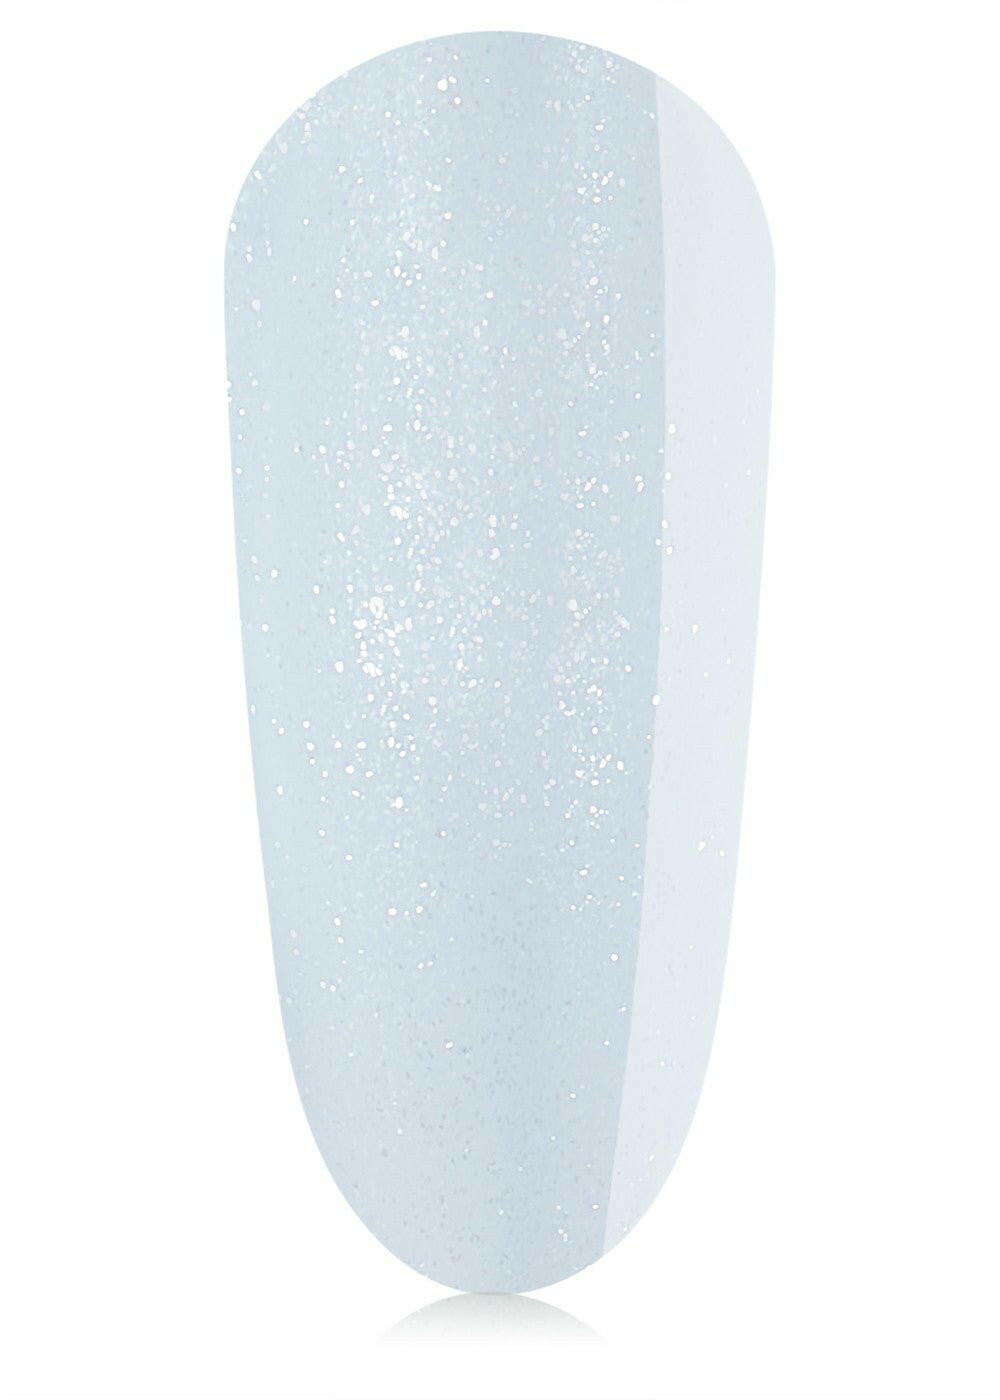 Frozen BIAB MINI by the GELbottle - thePINKchair.ca - Builder Gel - the GEL bottle